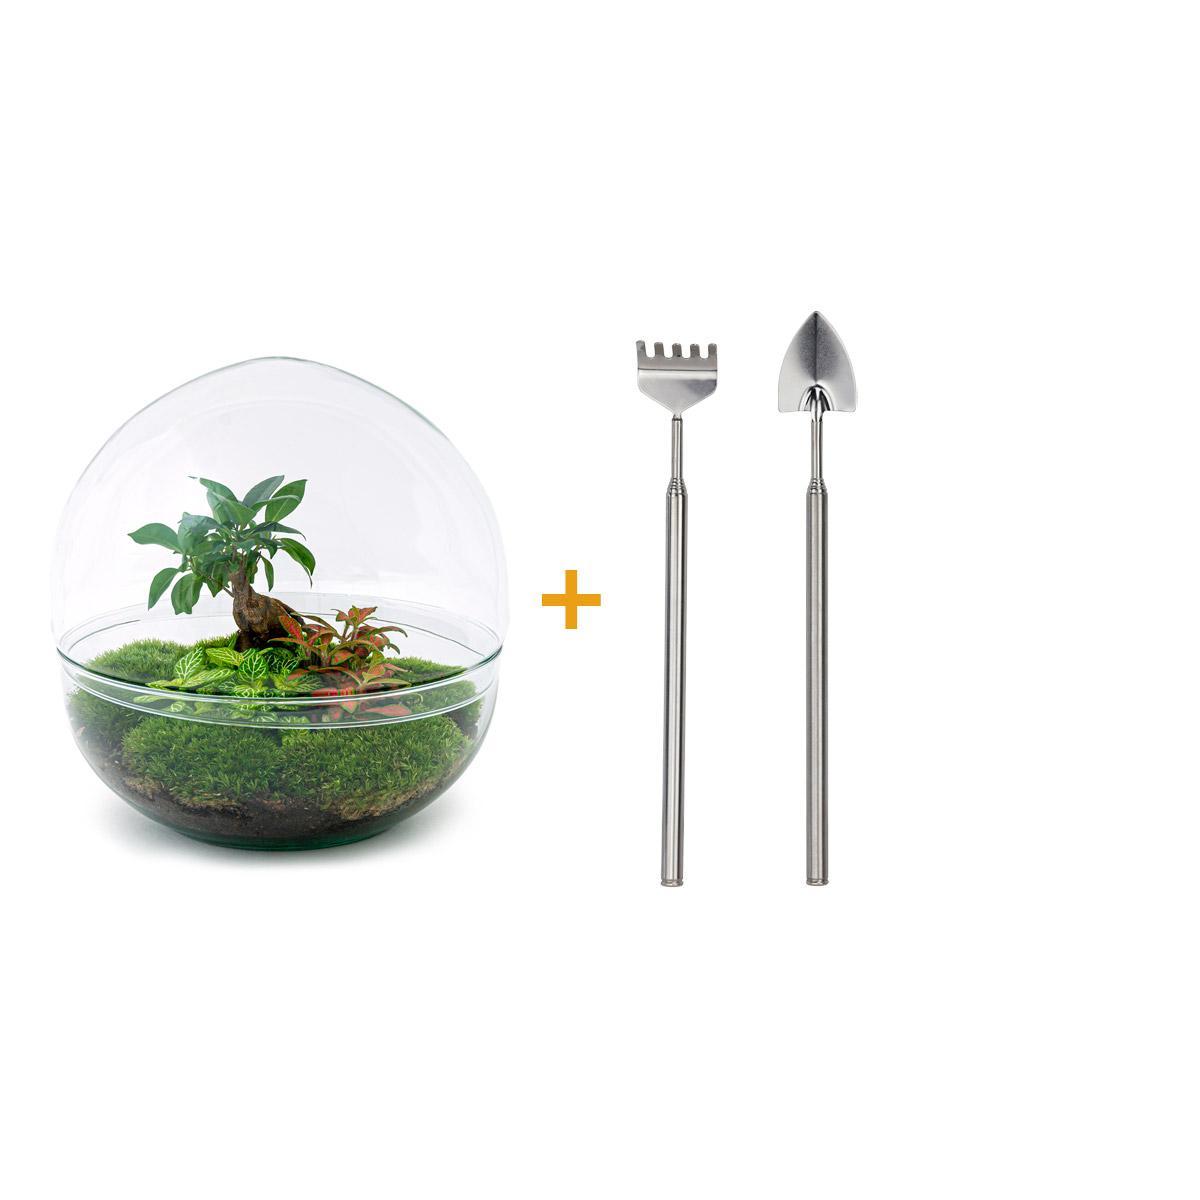 DIY terrarium - Dome XL - Ficus Ginseng Bonsai - ↕ 30 cm DIY terrarium - Dome XL - Ficus Ginseng Bonsai - ↕ 30 cm - Rake + Shovel